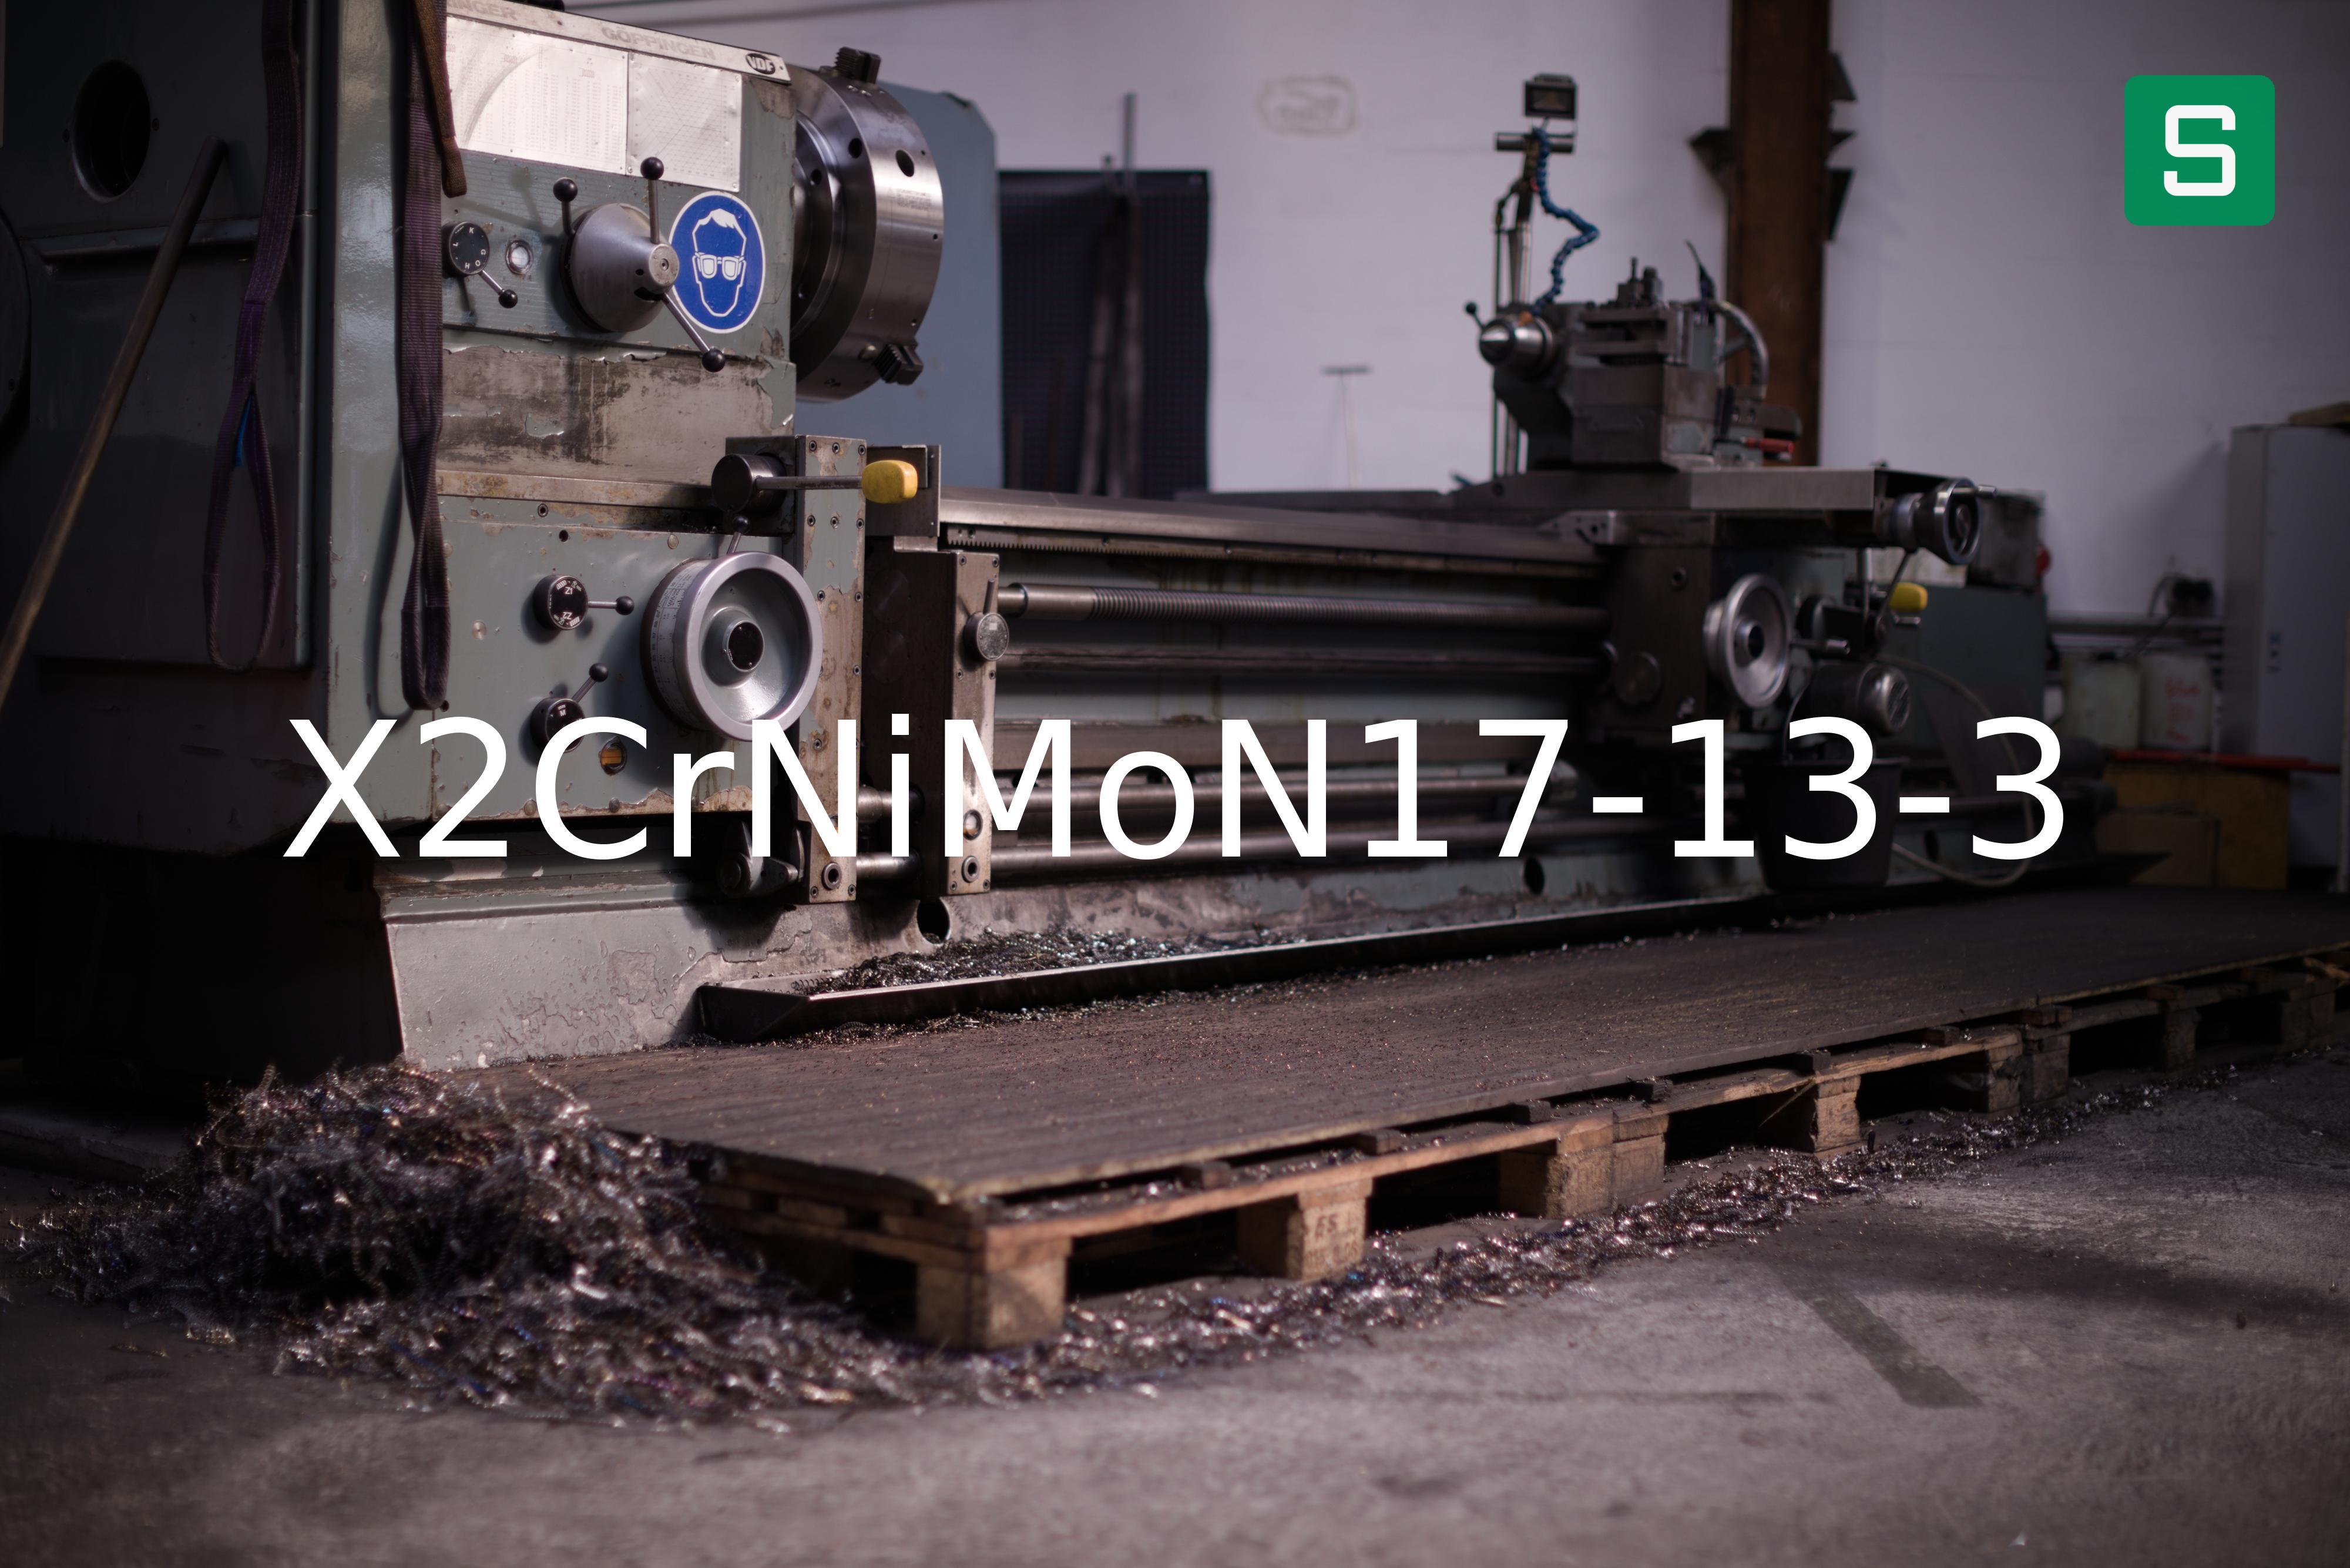 Steel Material: X2CrNiMoN17-13-3